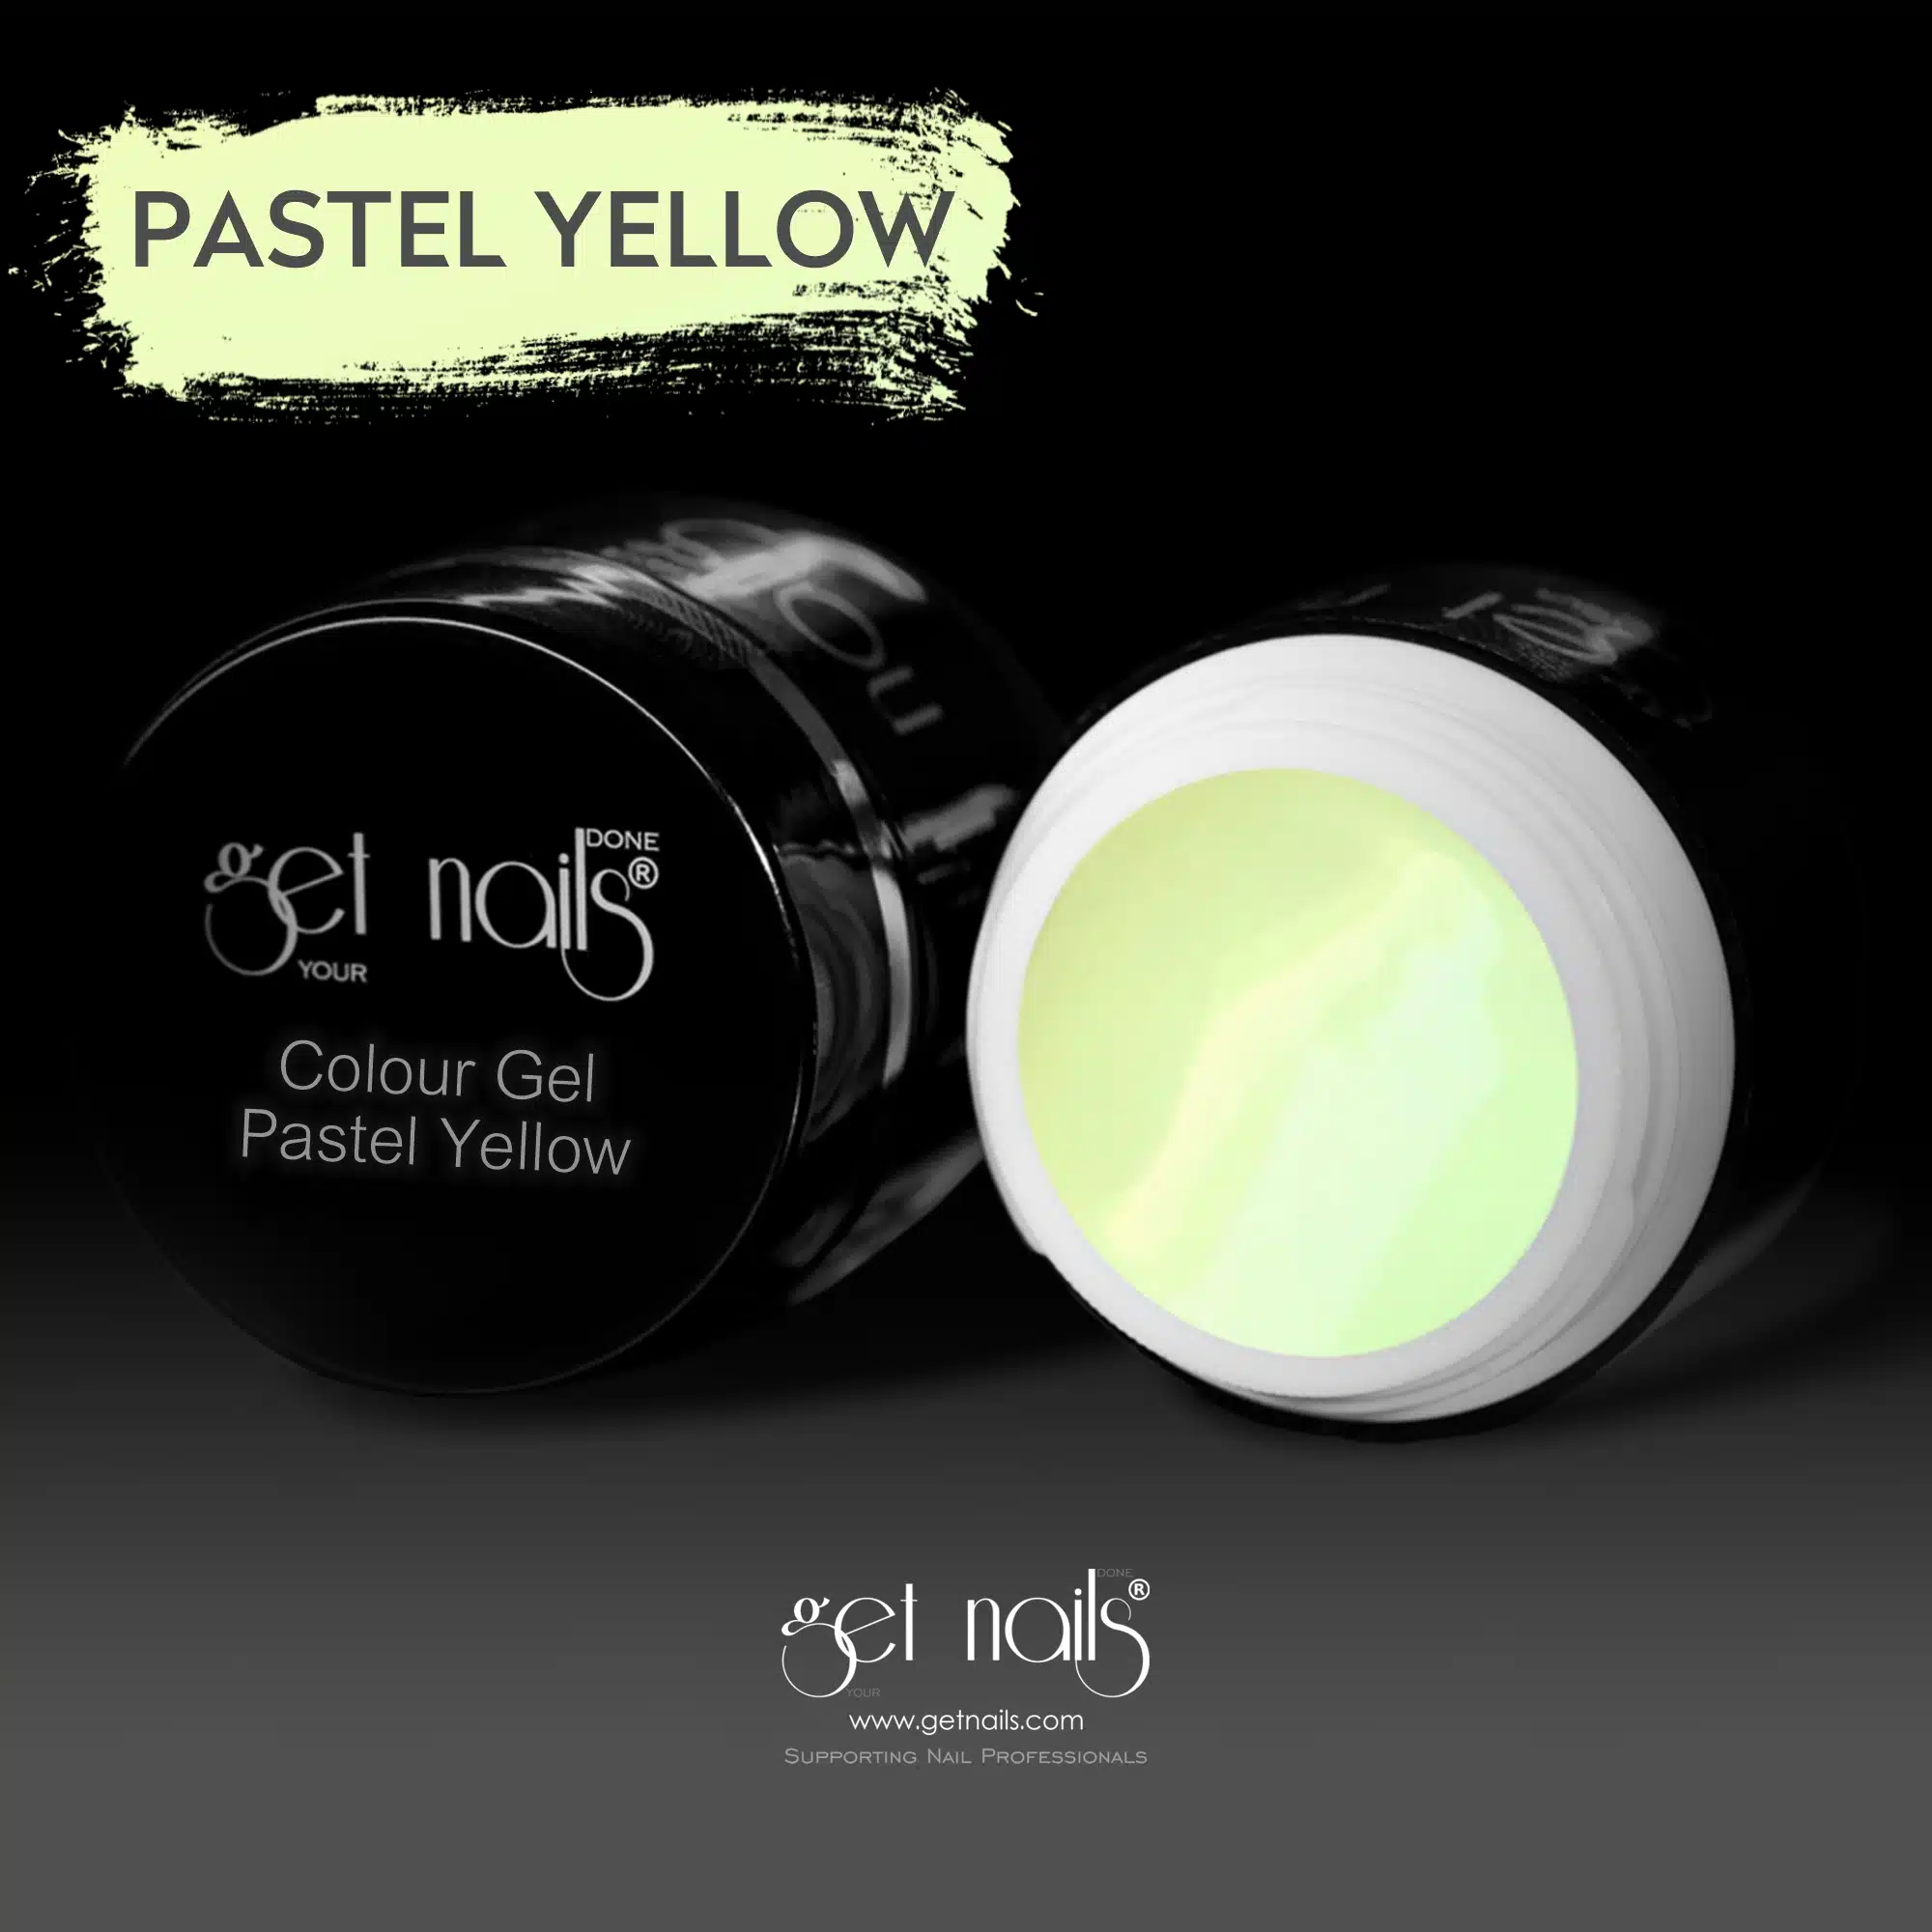 Get Nails Austria - Цветной гель Pastel Yellow 5g